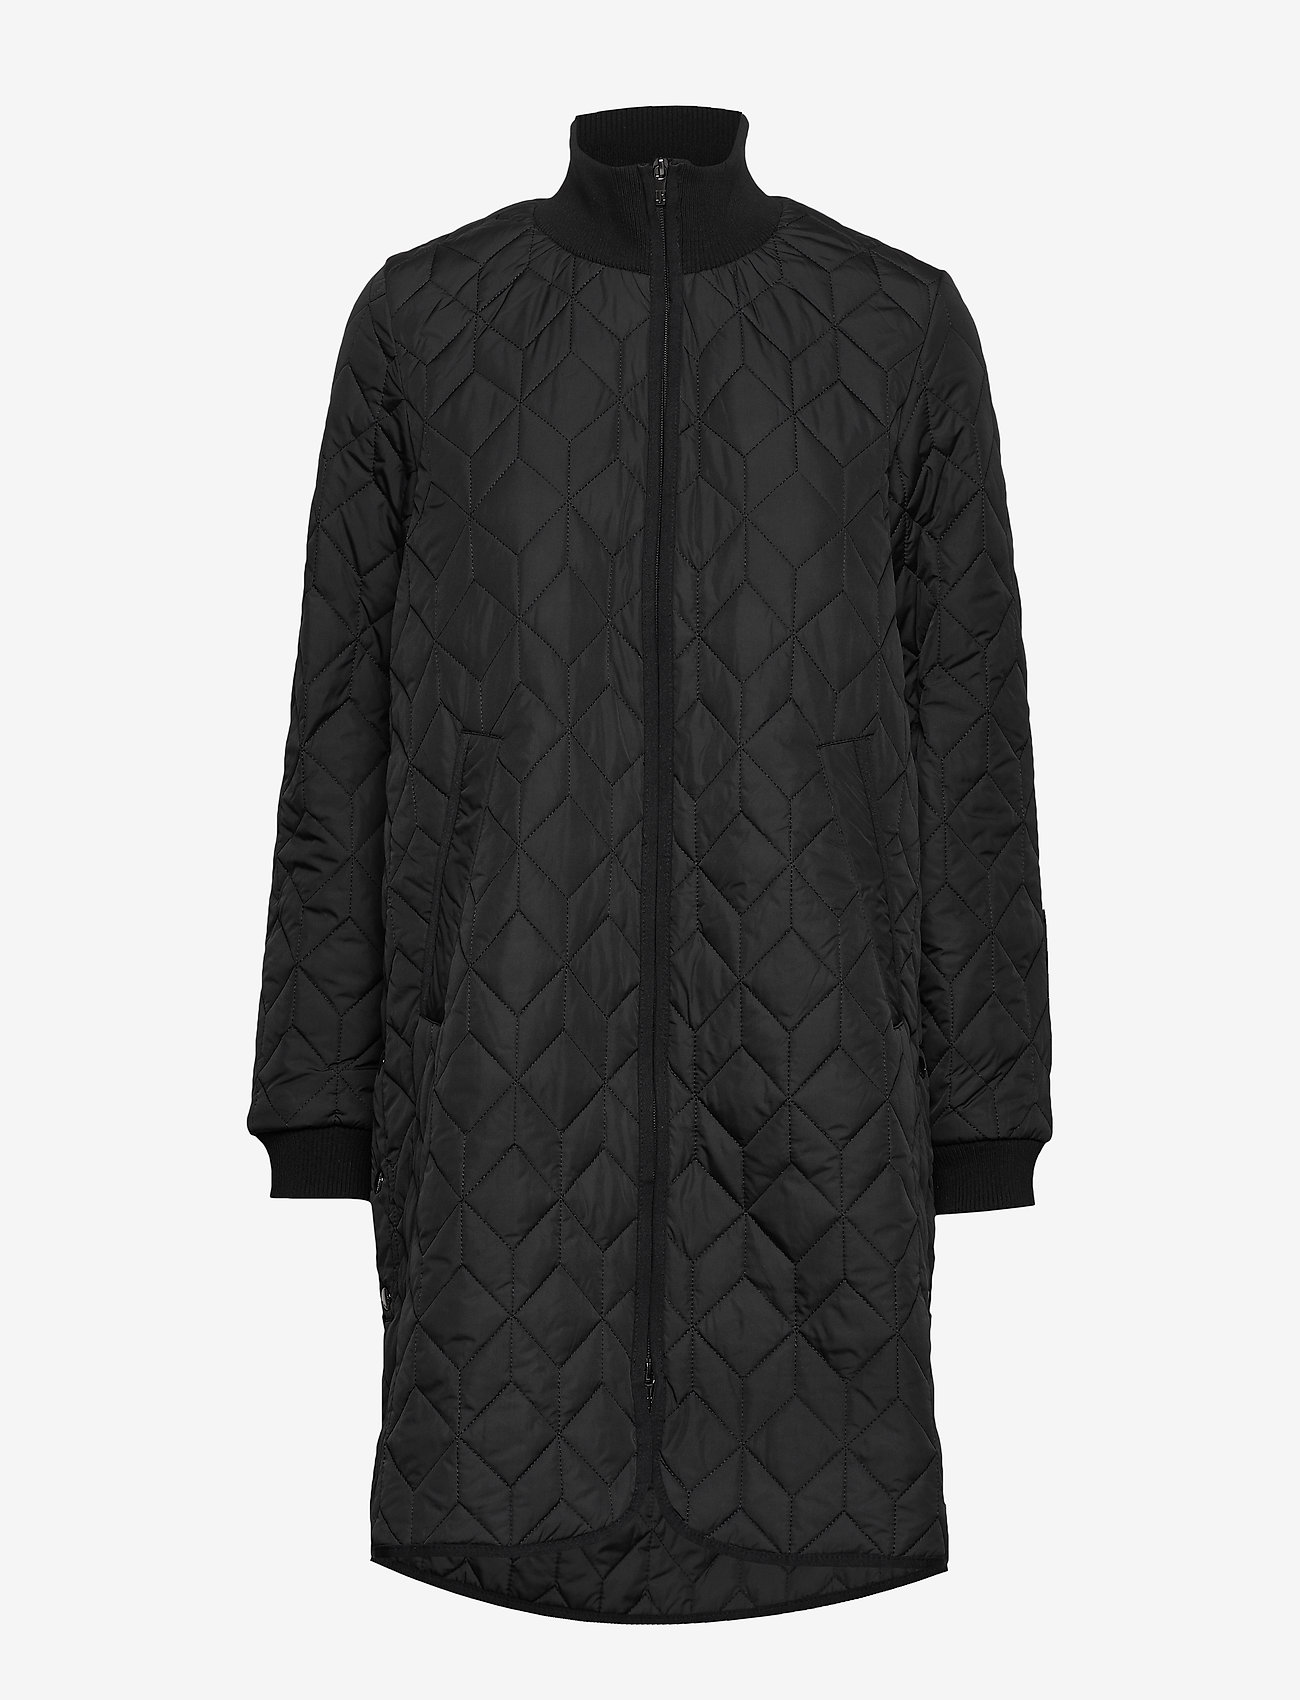 Ilse Jacobsen - Outdoor coat - pavasarinės striukės - black - 1